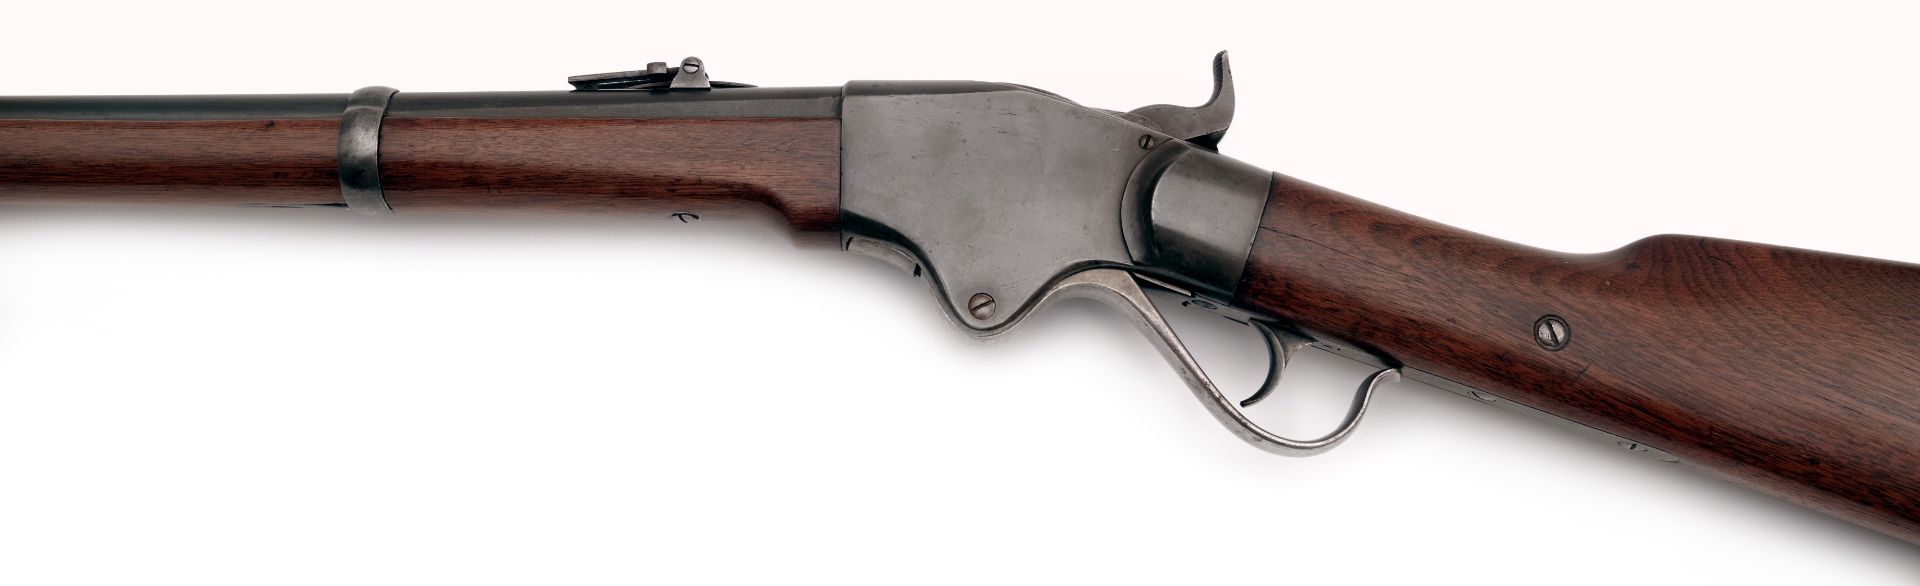 Spencer Mod. 1865 Army Rifle